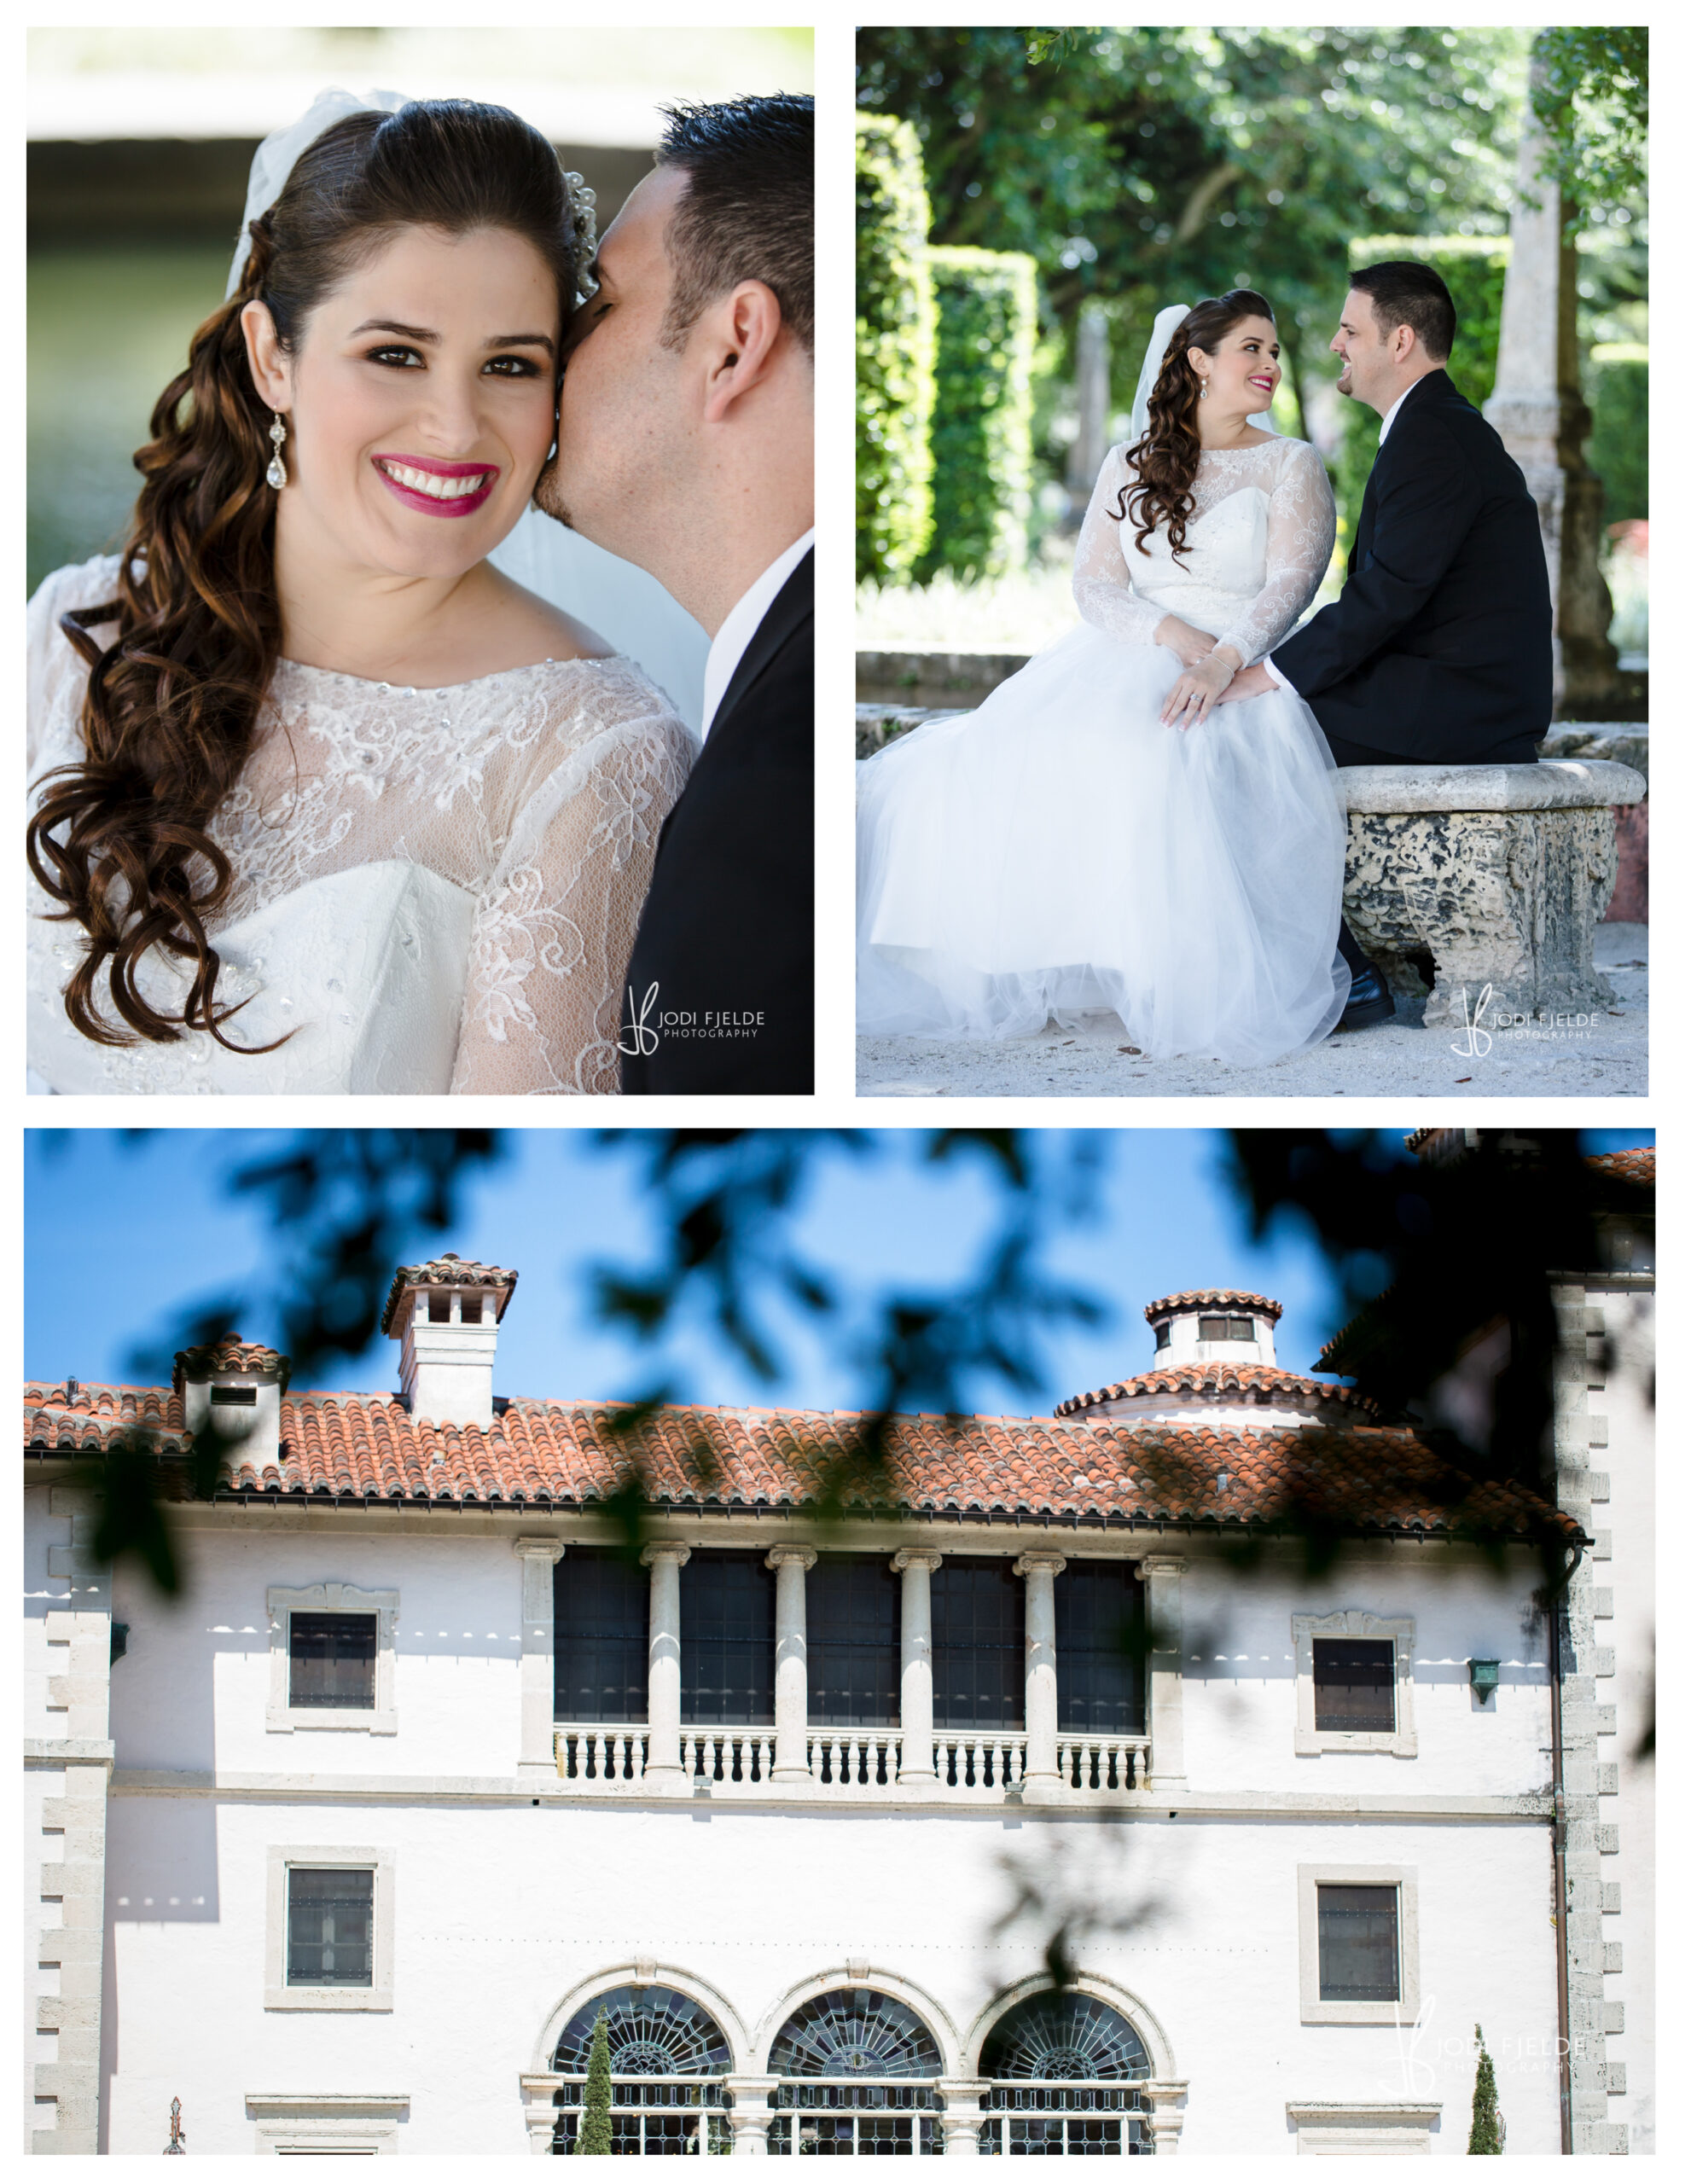 Vizcaya_Miami_Florida_Bridal_Wedding_Portraits_Jodi_Fjelde_Photography-1.jpg